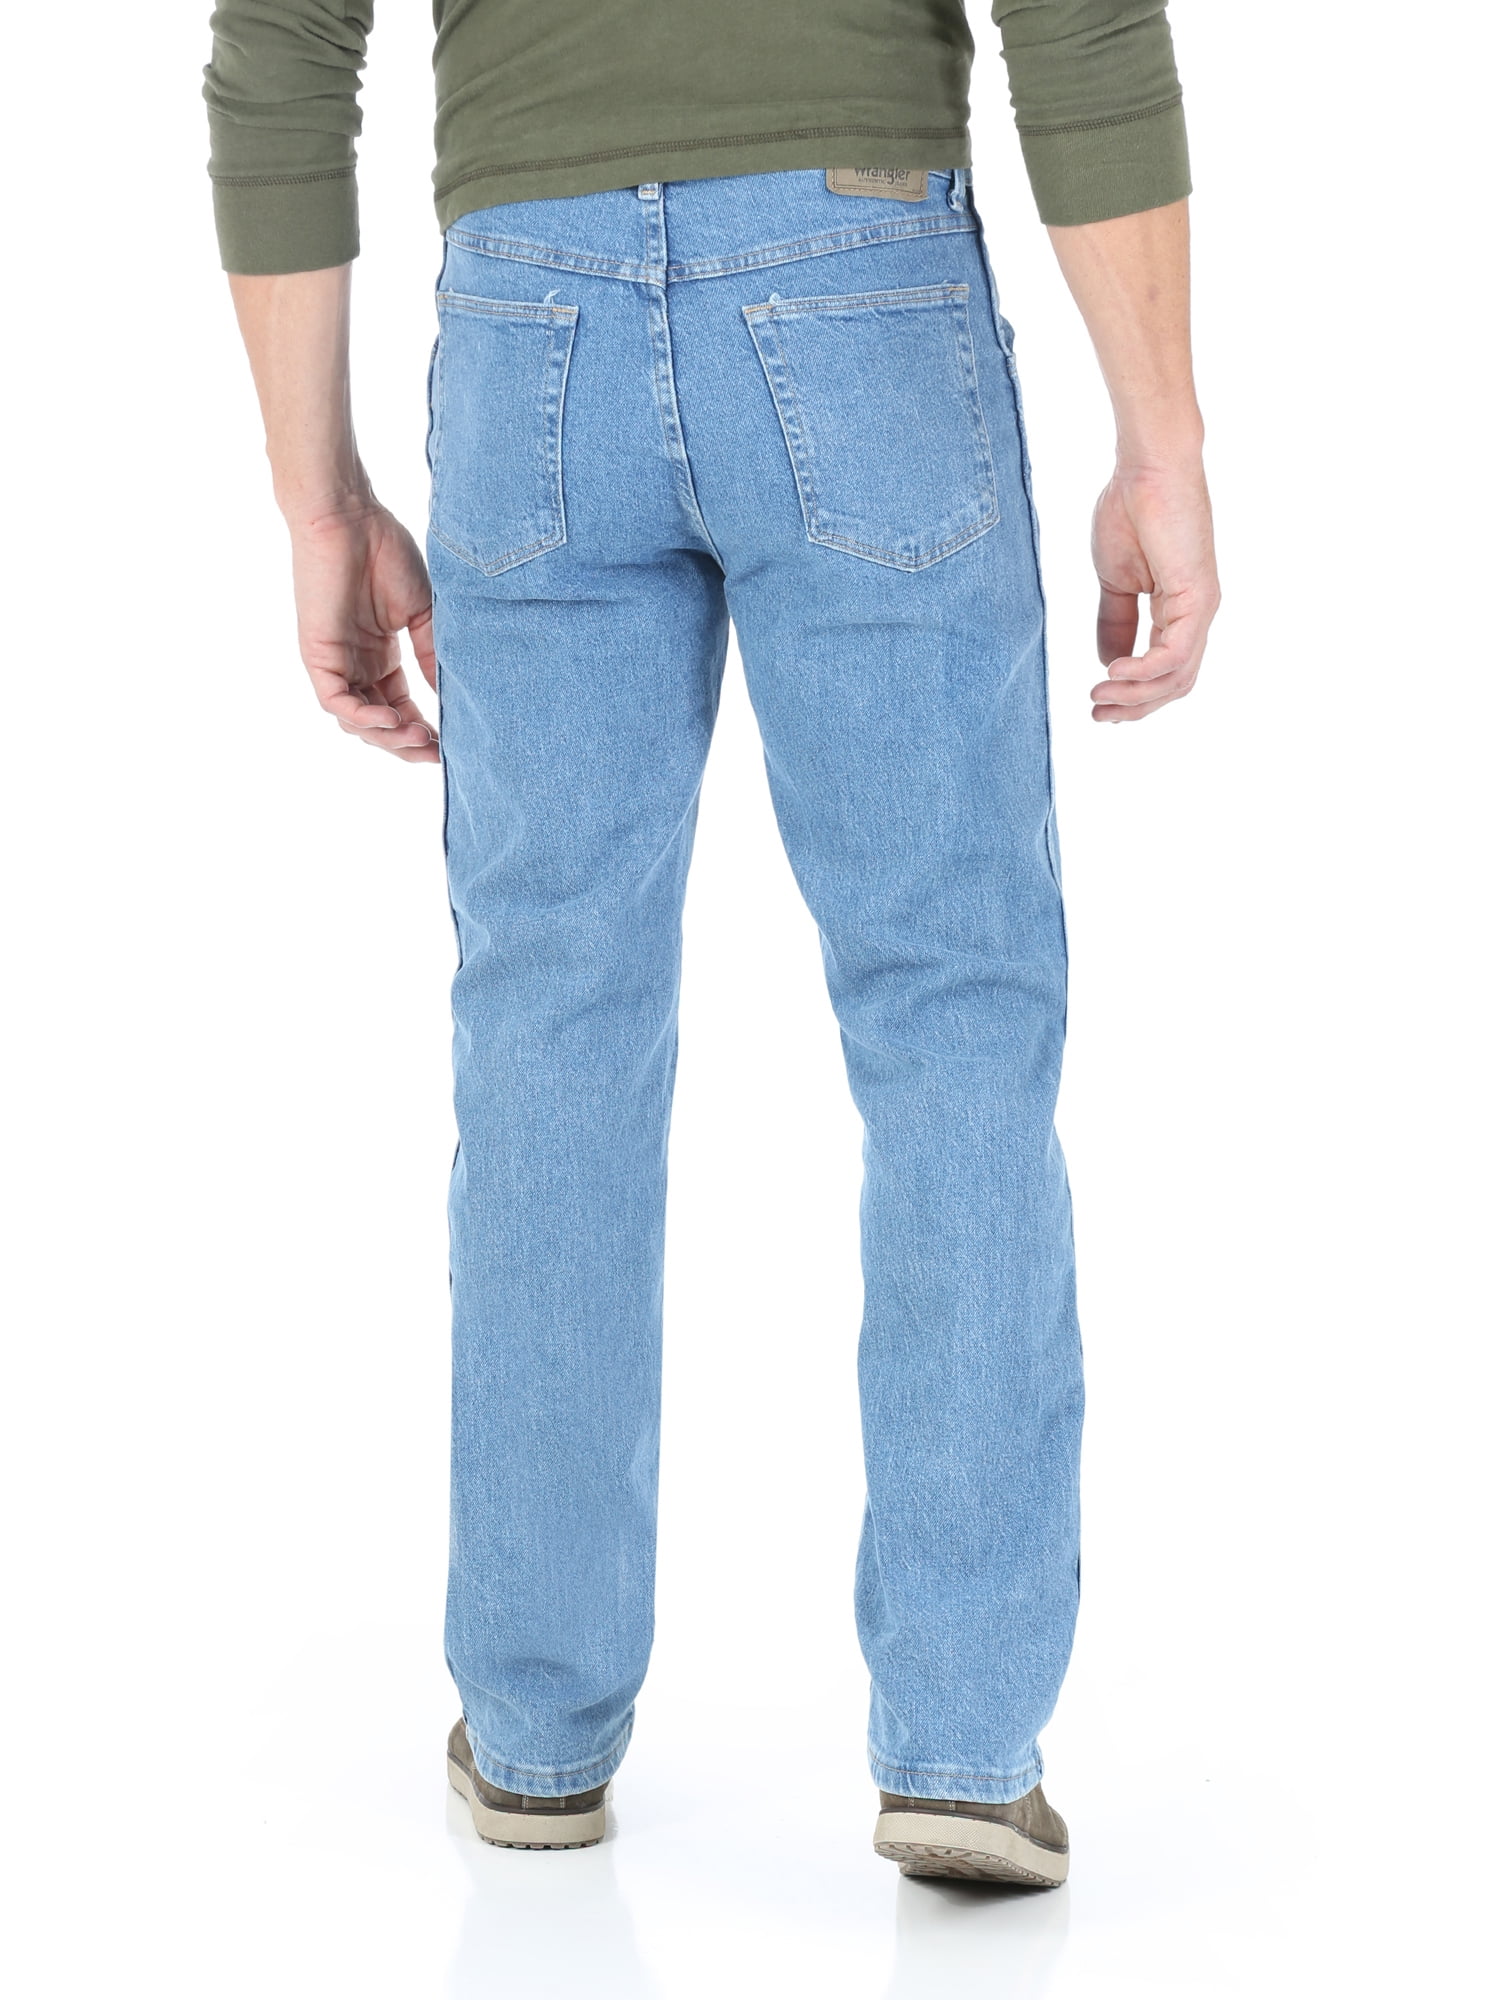 Arriba 45+ imagen wrangler flex waist jeans at walmart - Thptnganamst ...